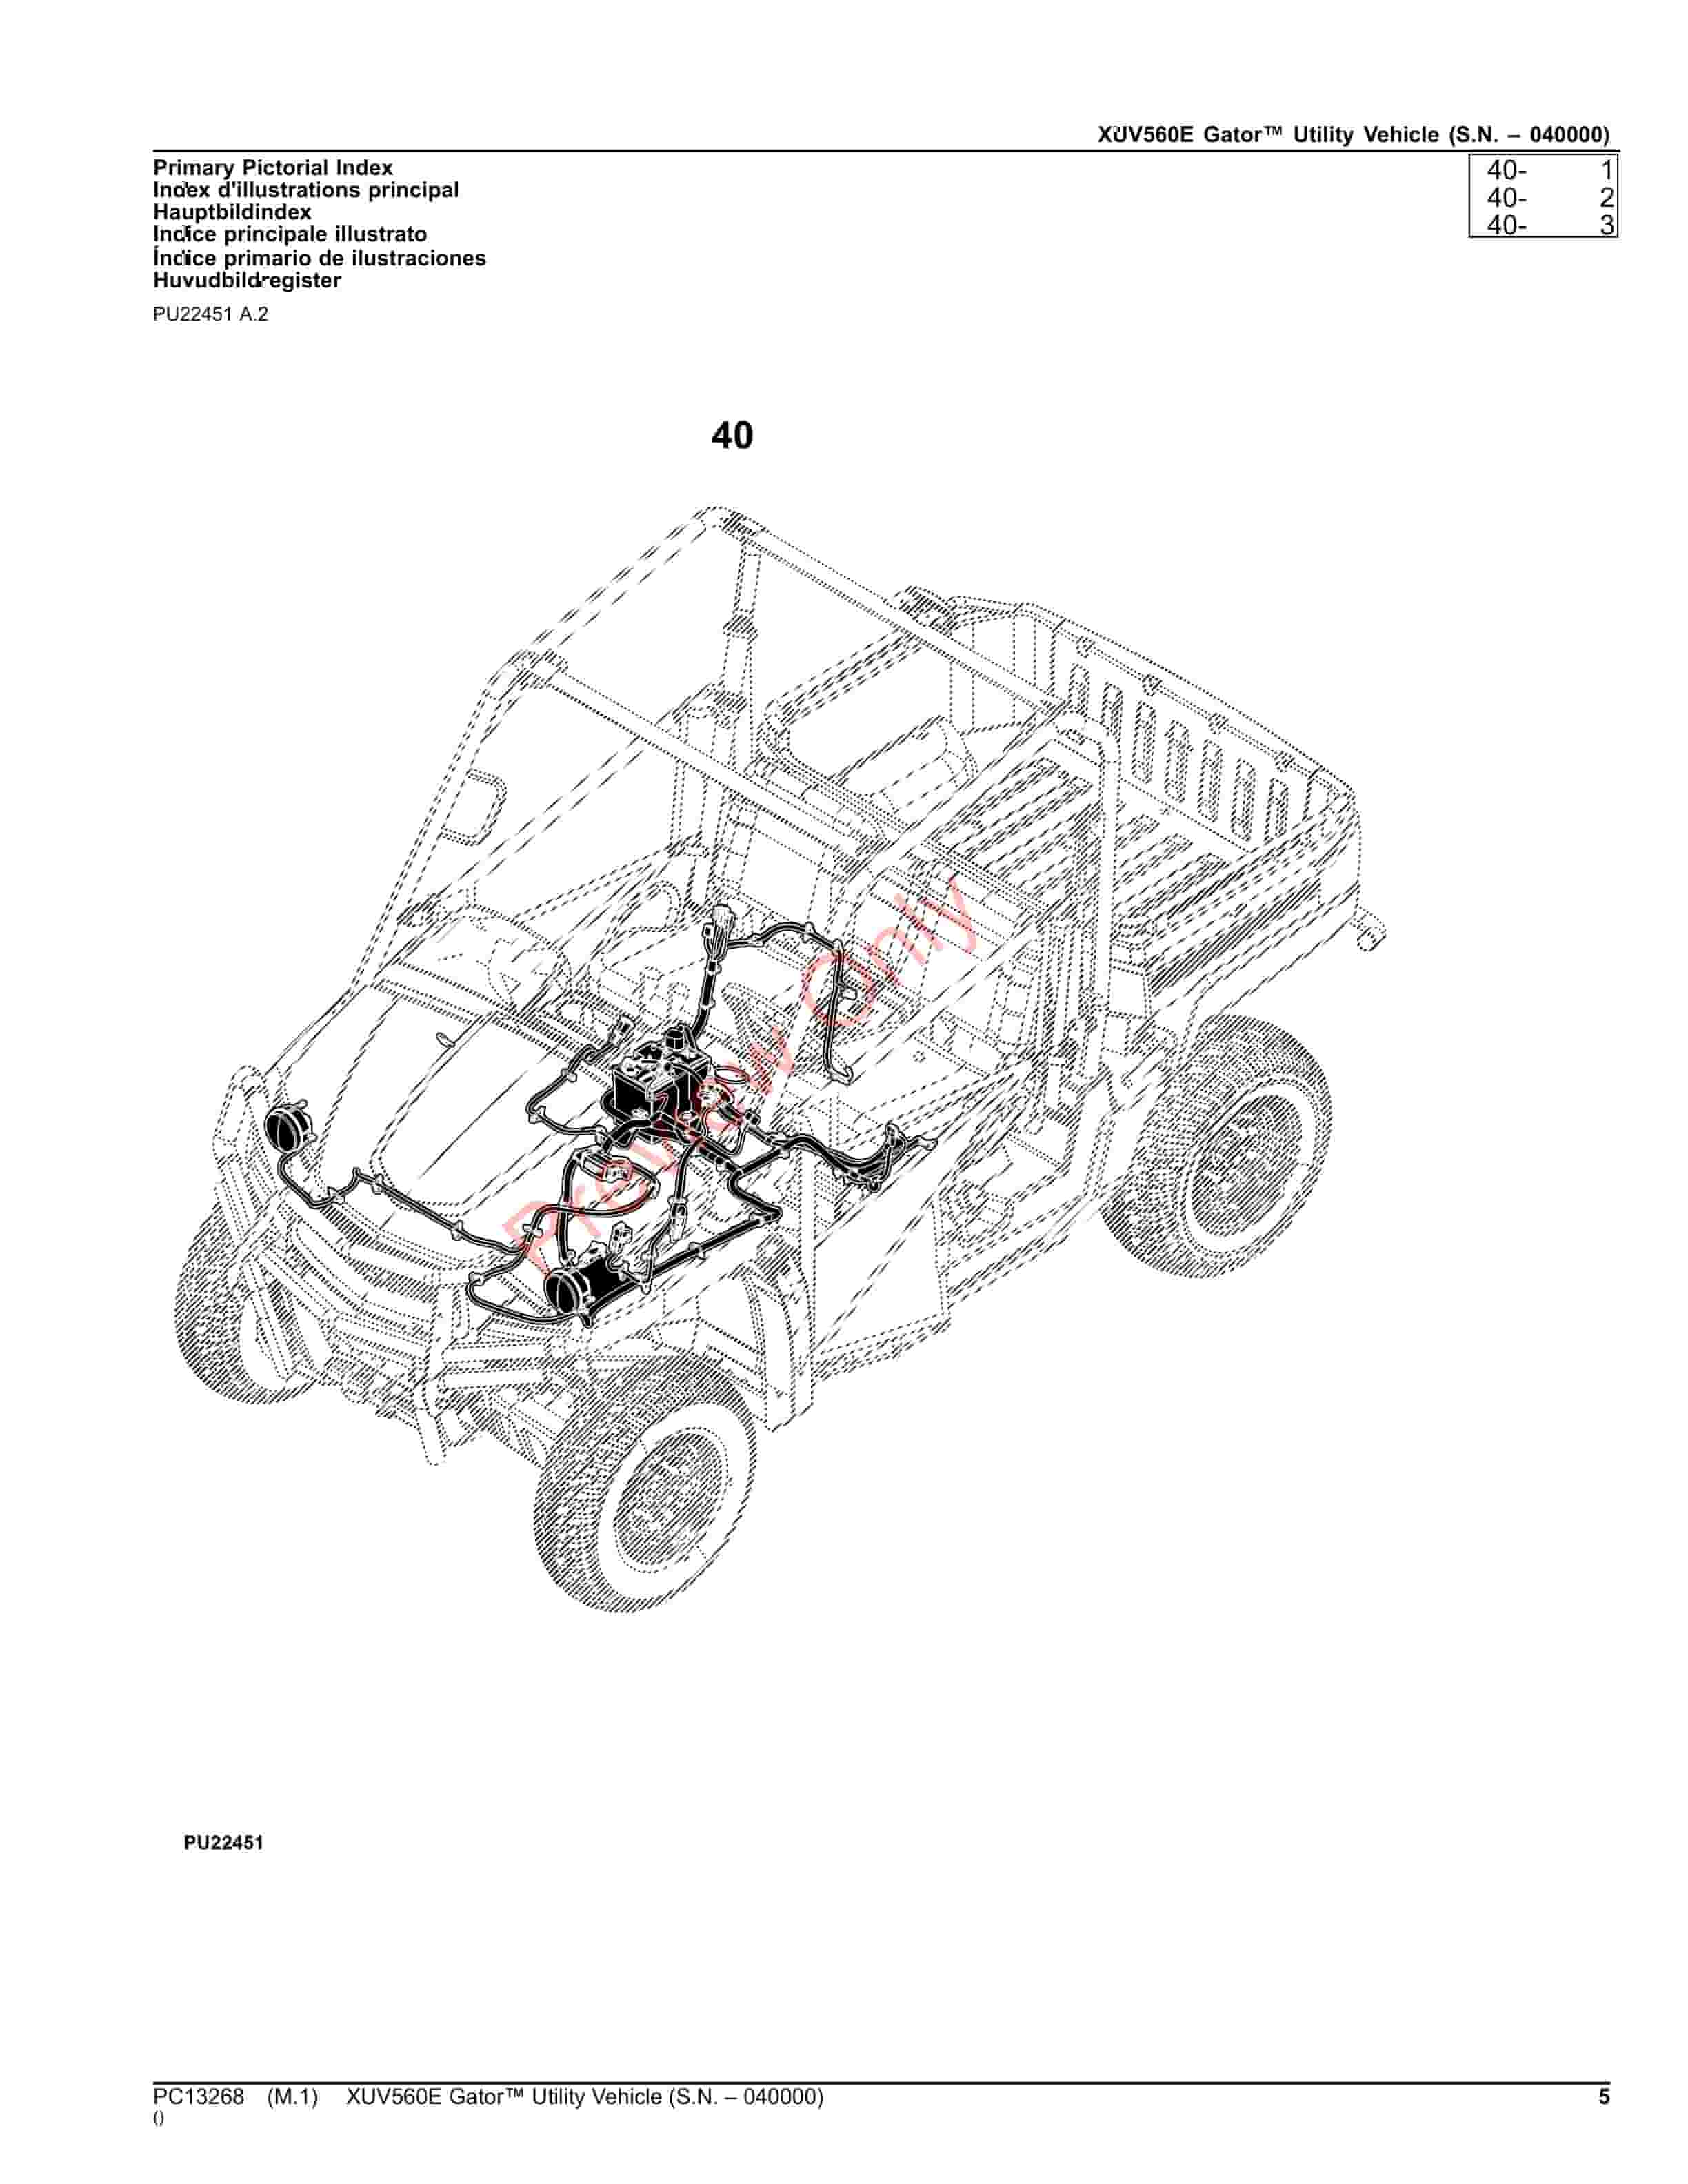 John Deere XUV560E Gator Utility Vehicle (S.N. 040000) Parts Catalog PC13268 23NOV23-5